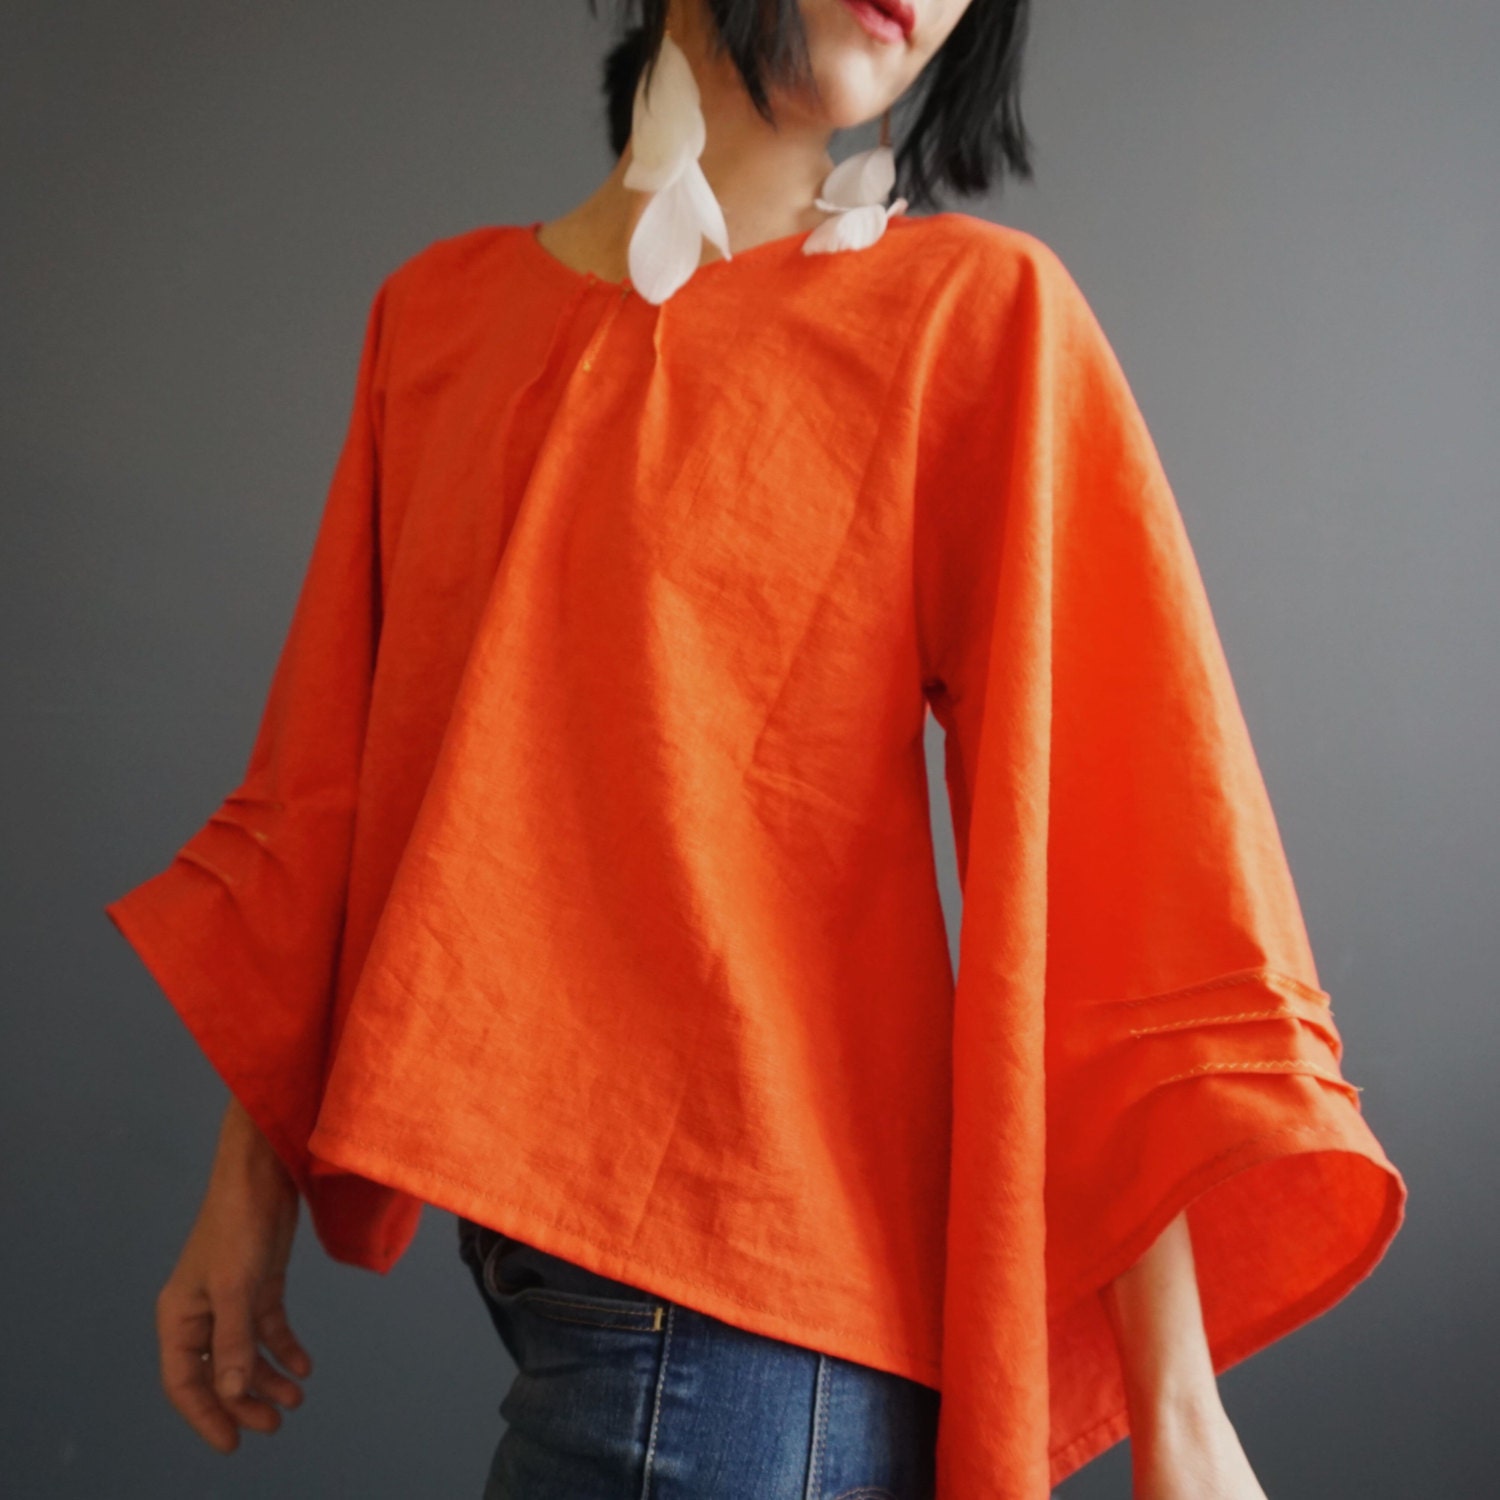 Orange Linen Top Womens Handmade Blouse Bell Sleeve by iheartfink